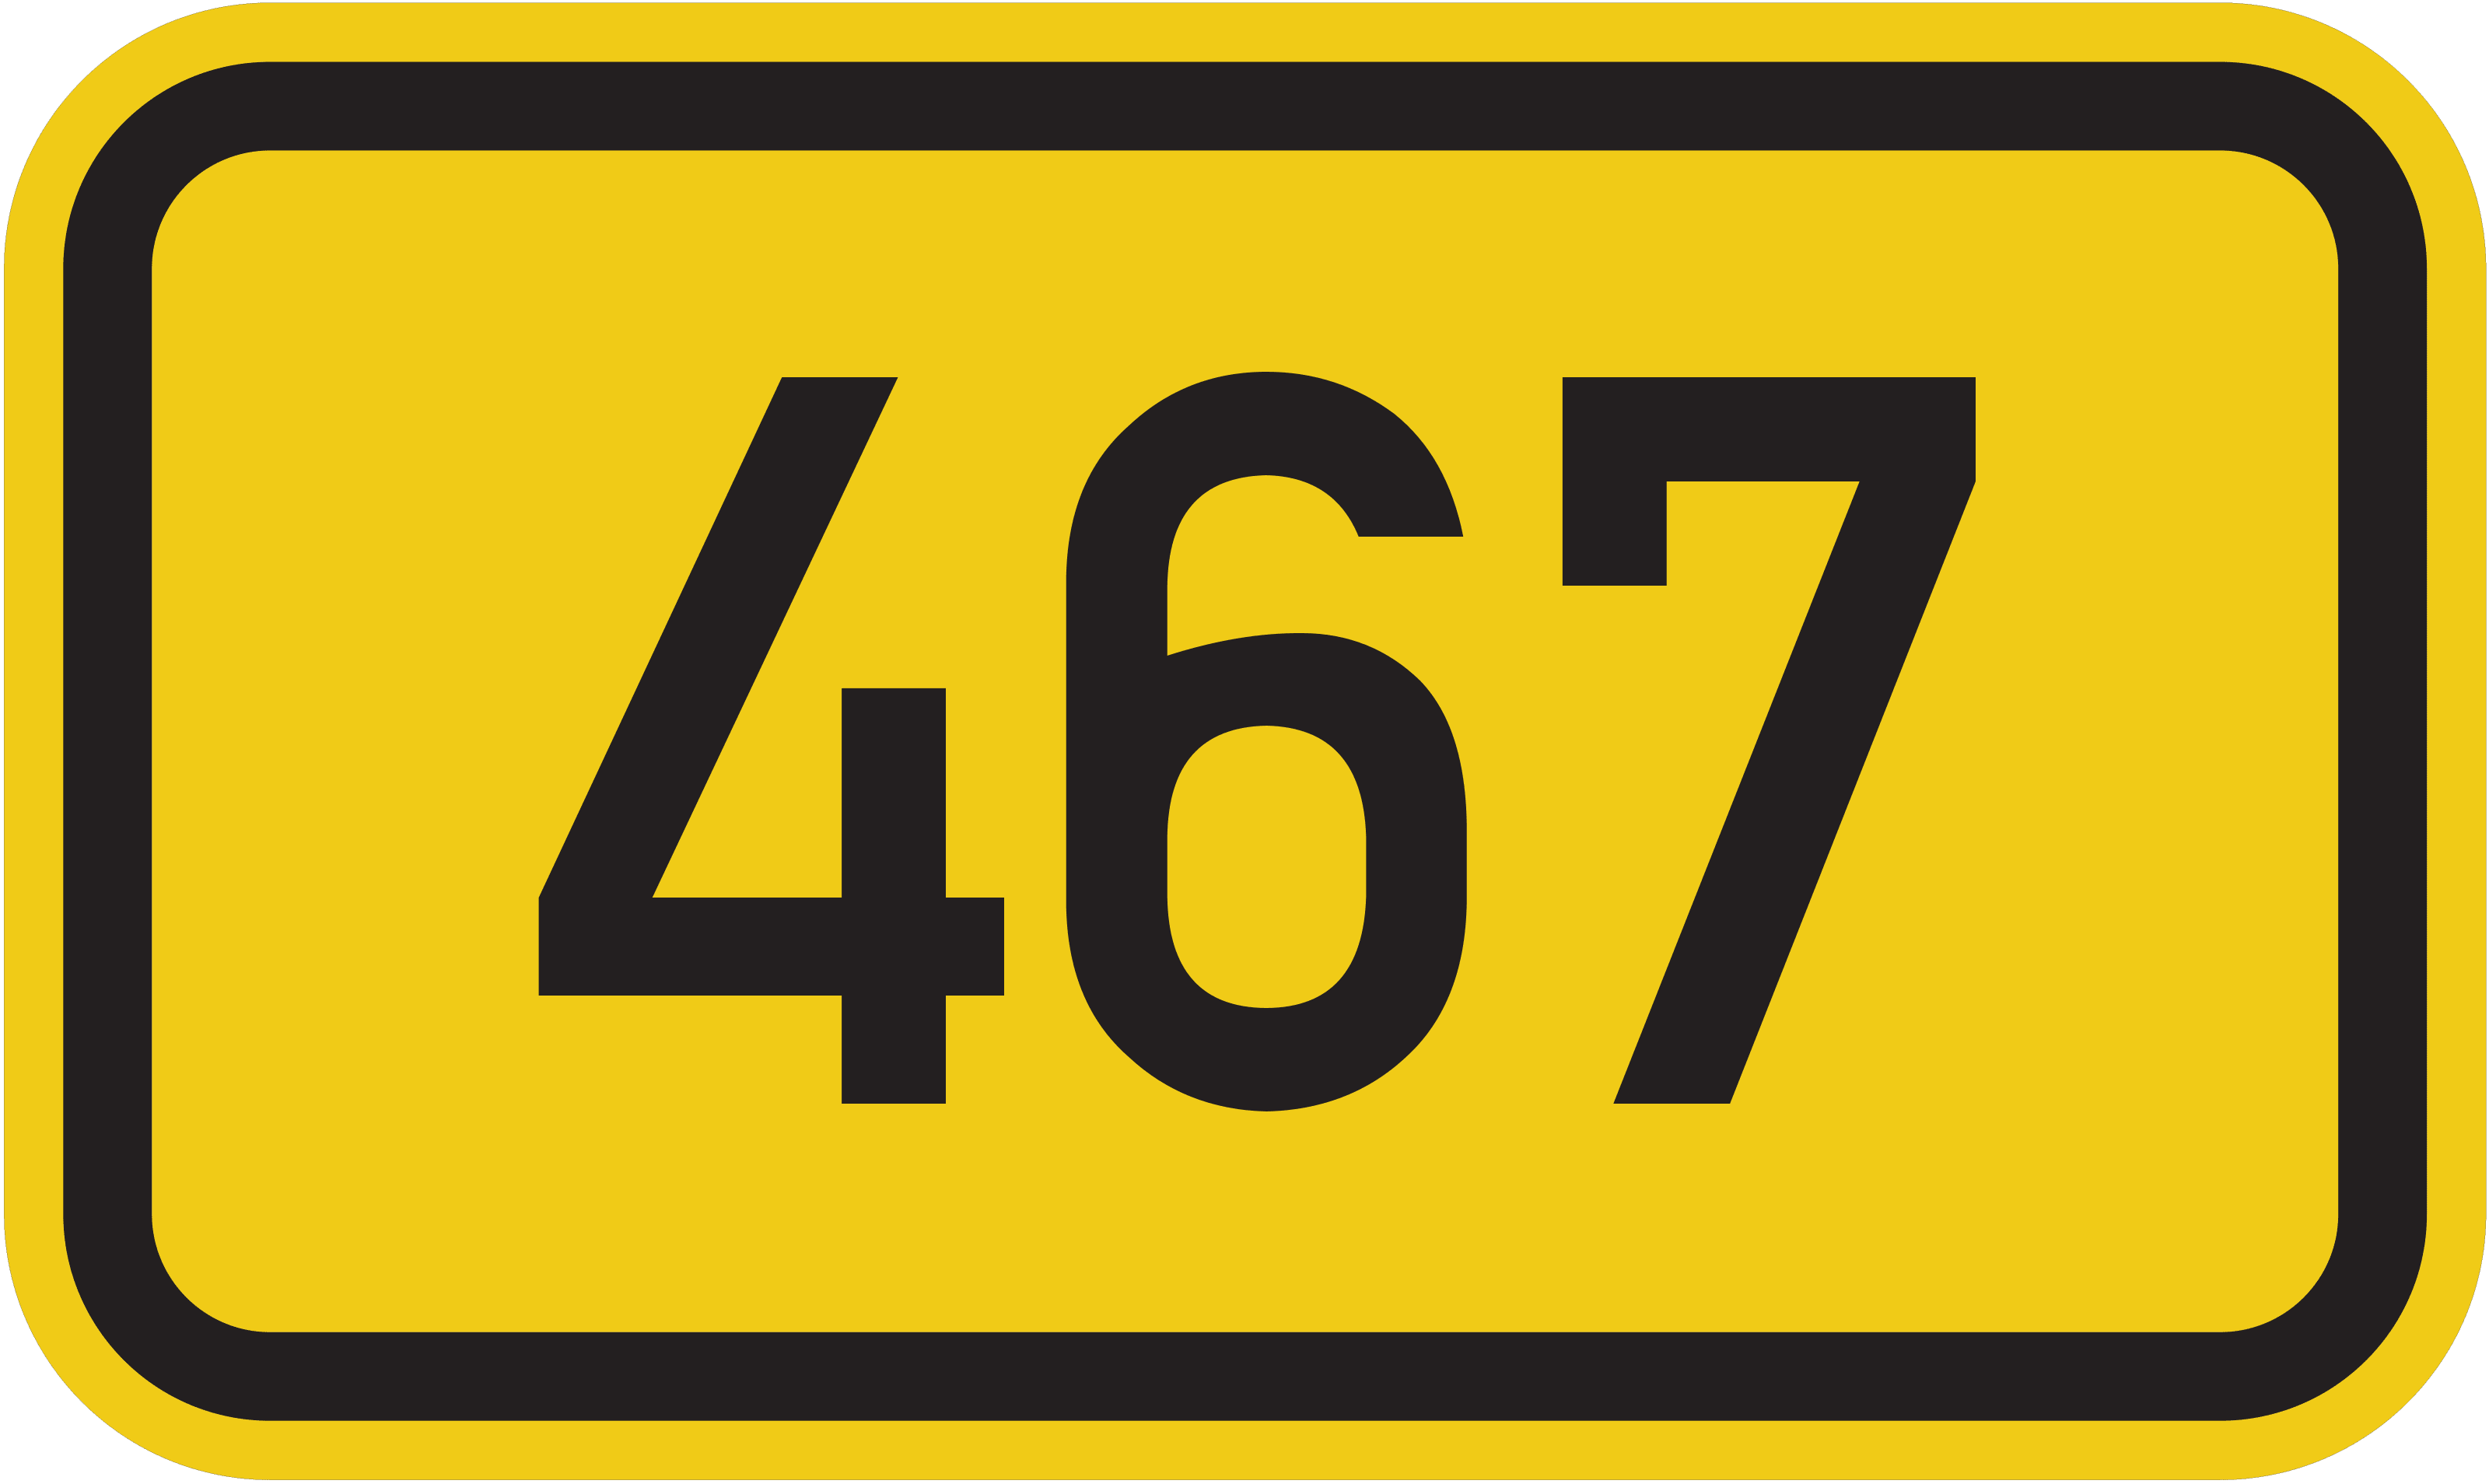 Straßenschild Bundesstraße 467